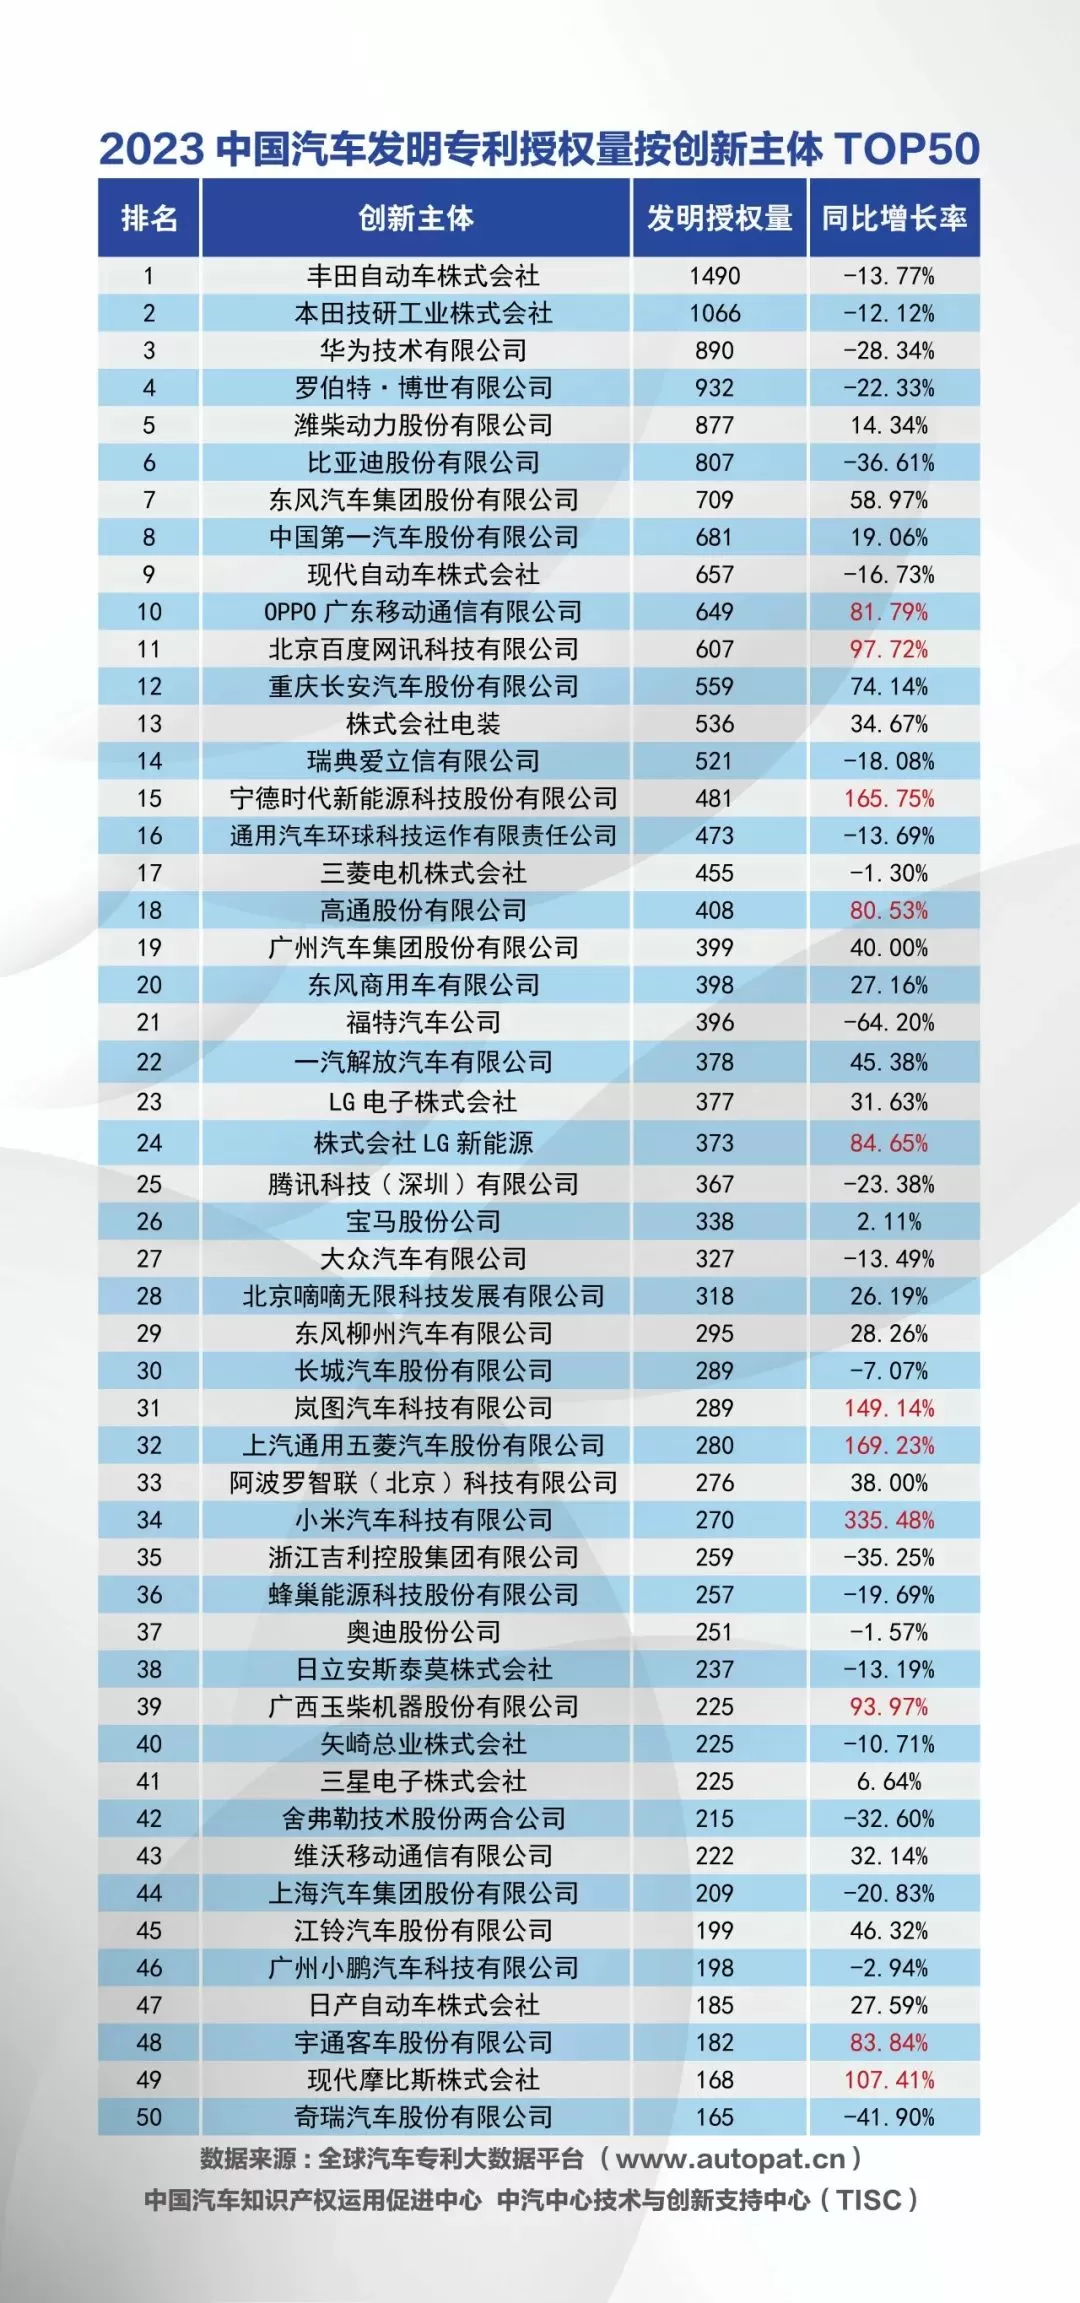 2023 Chinese Automotive Patent Data Analysis: Key Findings Revealed!